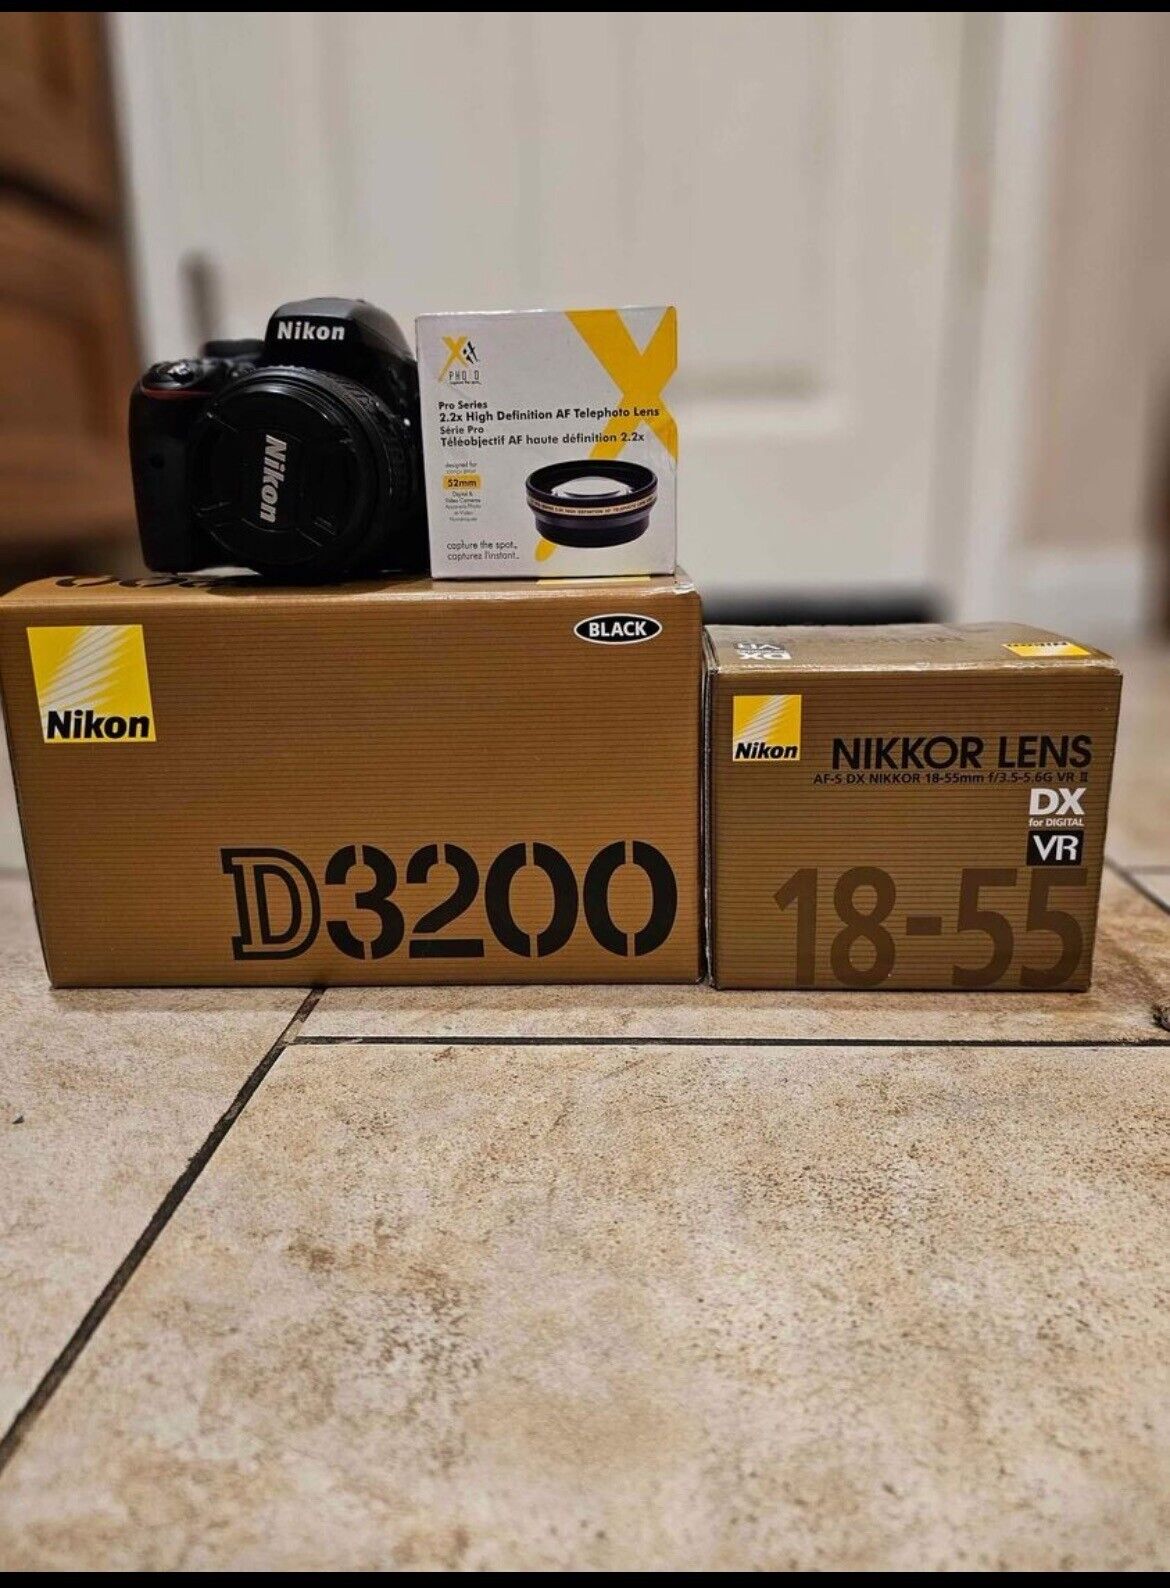 Nikon D D3200 24.2 MP Digital SLR Camera - Black